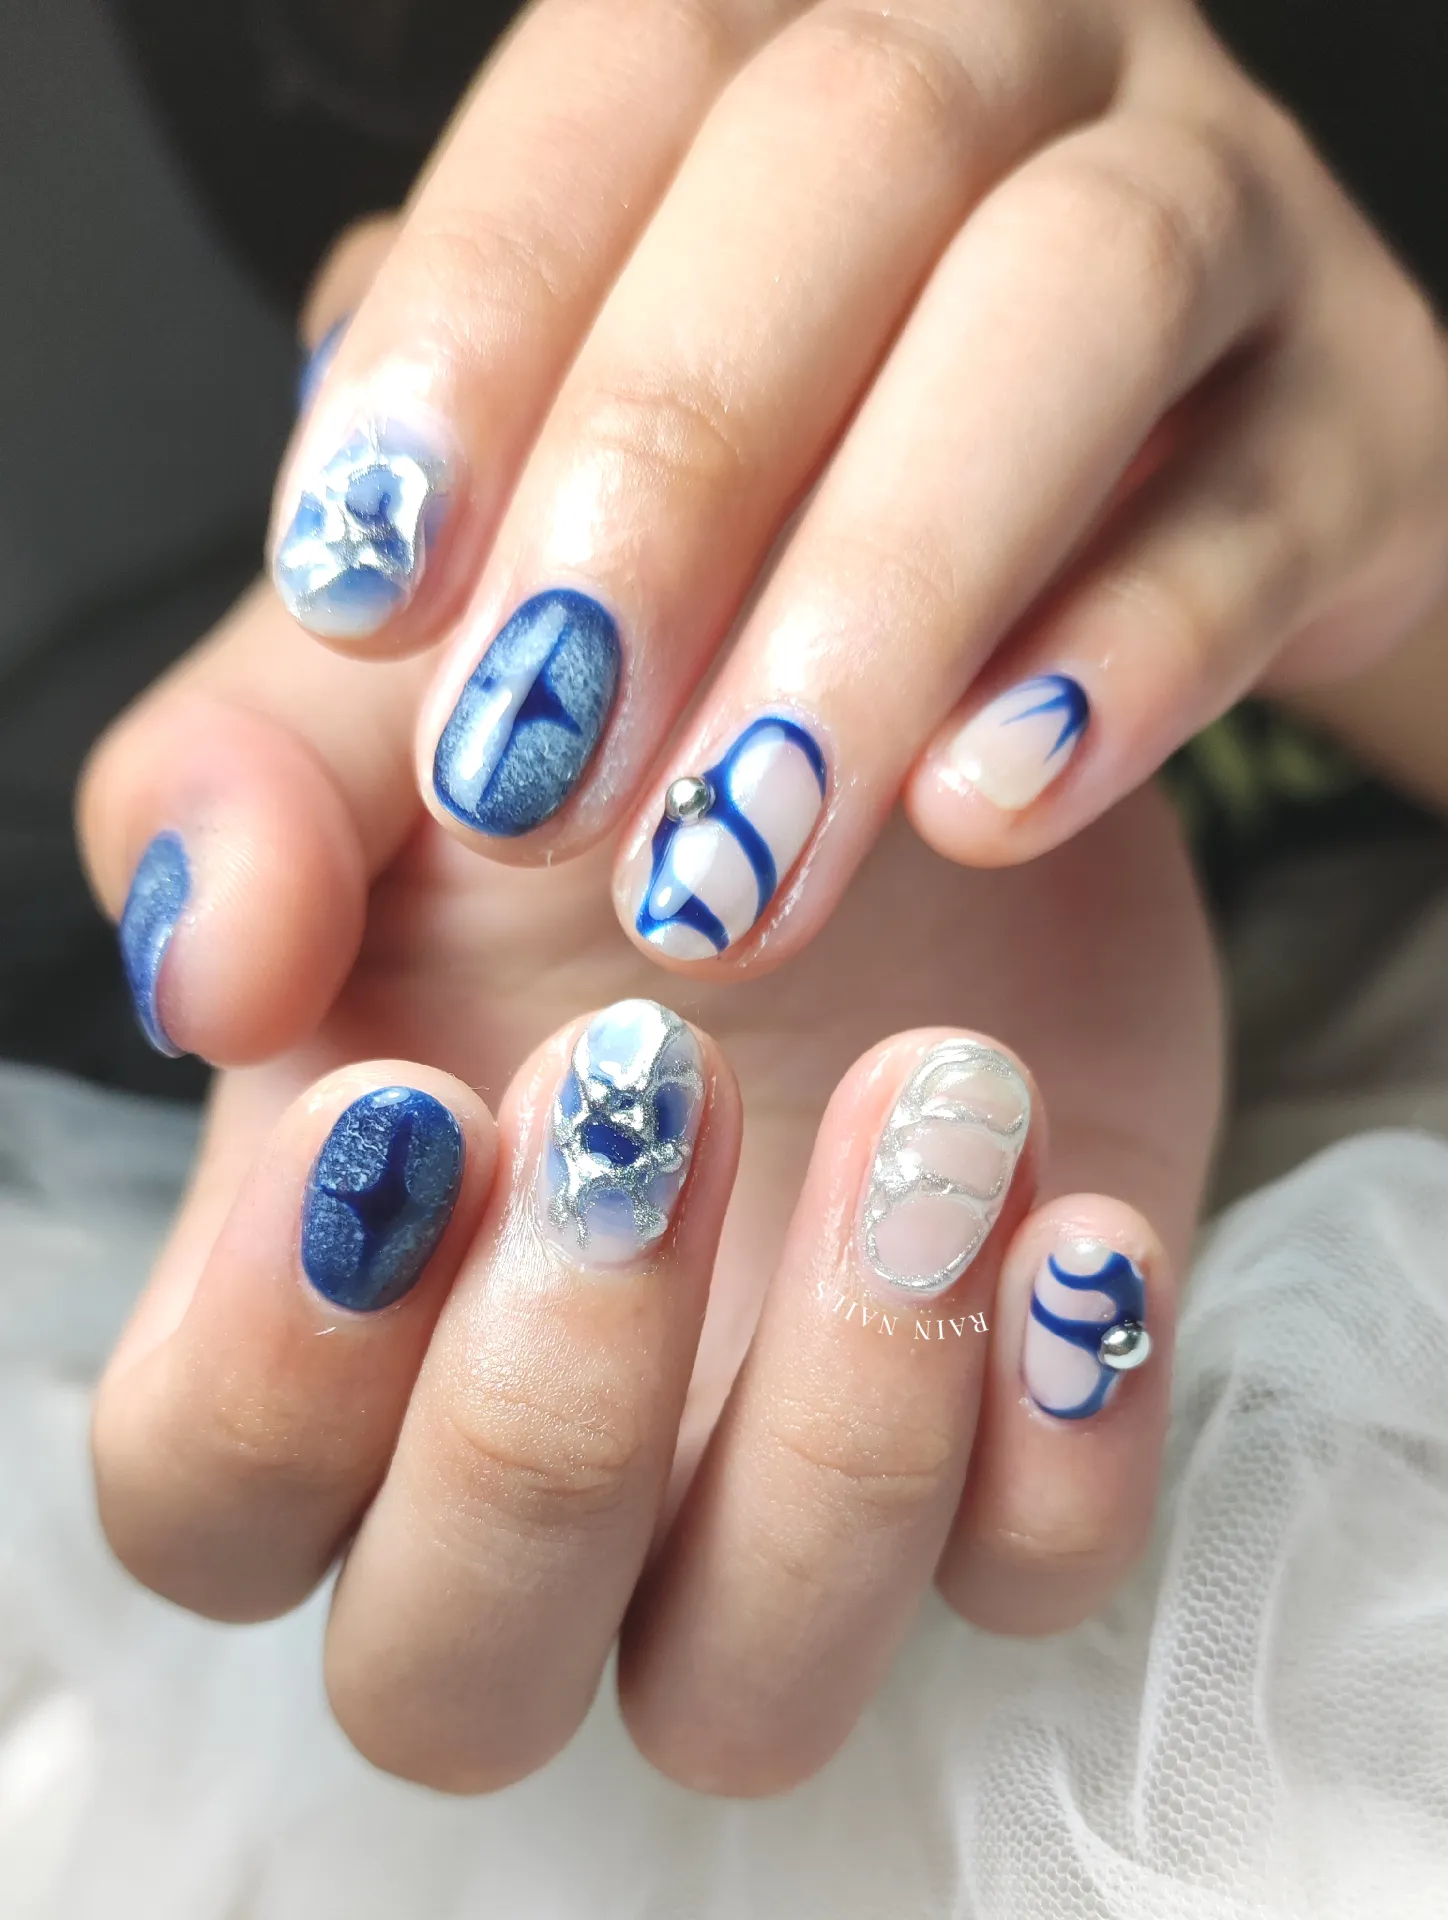 Chanel Nails,Cute!  Chanel nails, Classy nail designs, Chanel nails design